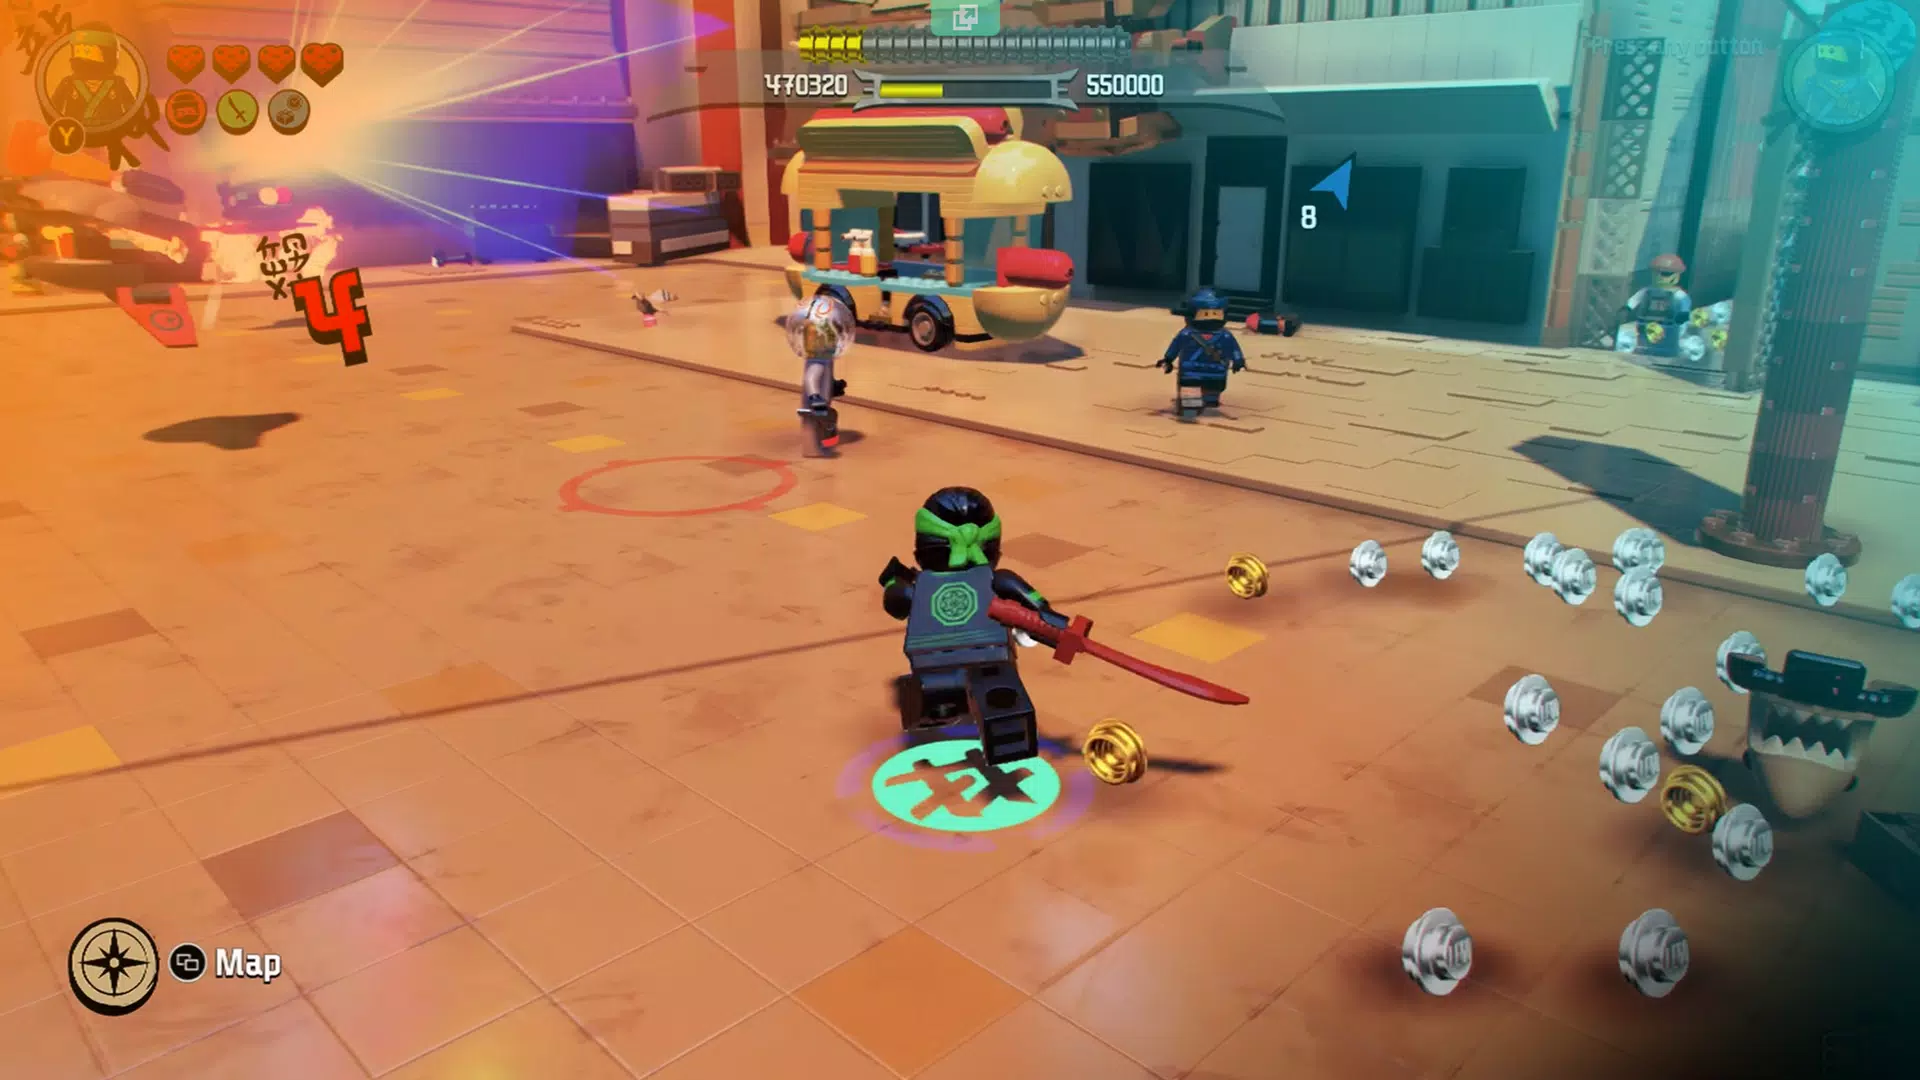 Скачать TopGuide The LEGO Ninjago Movie Videogame APK для Android